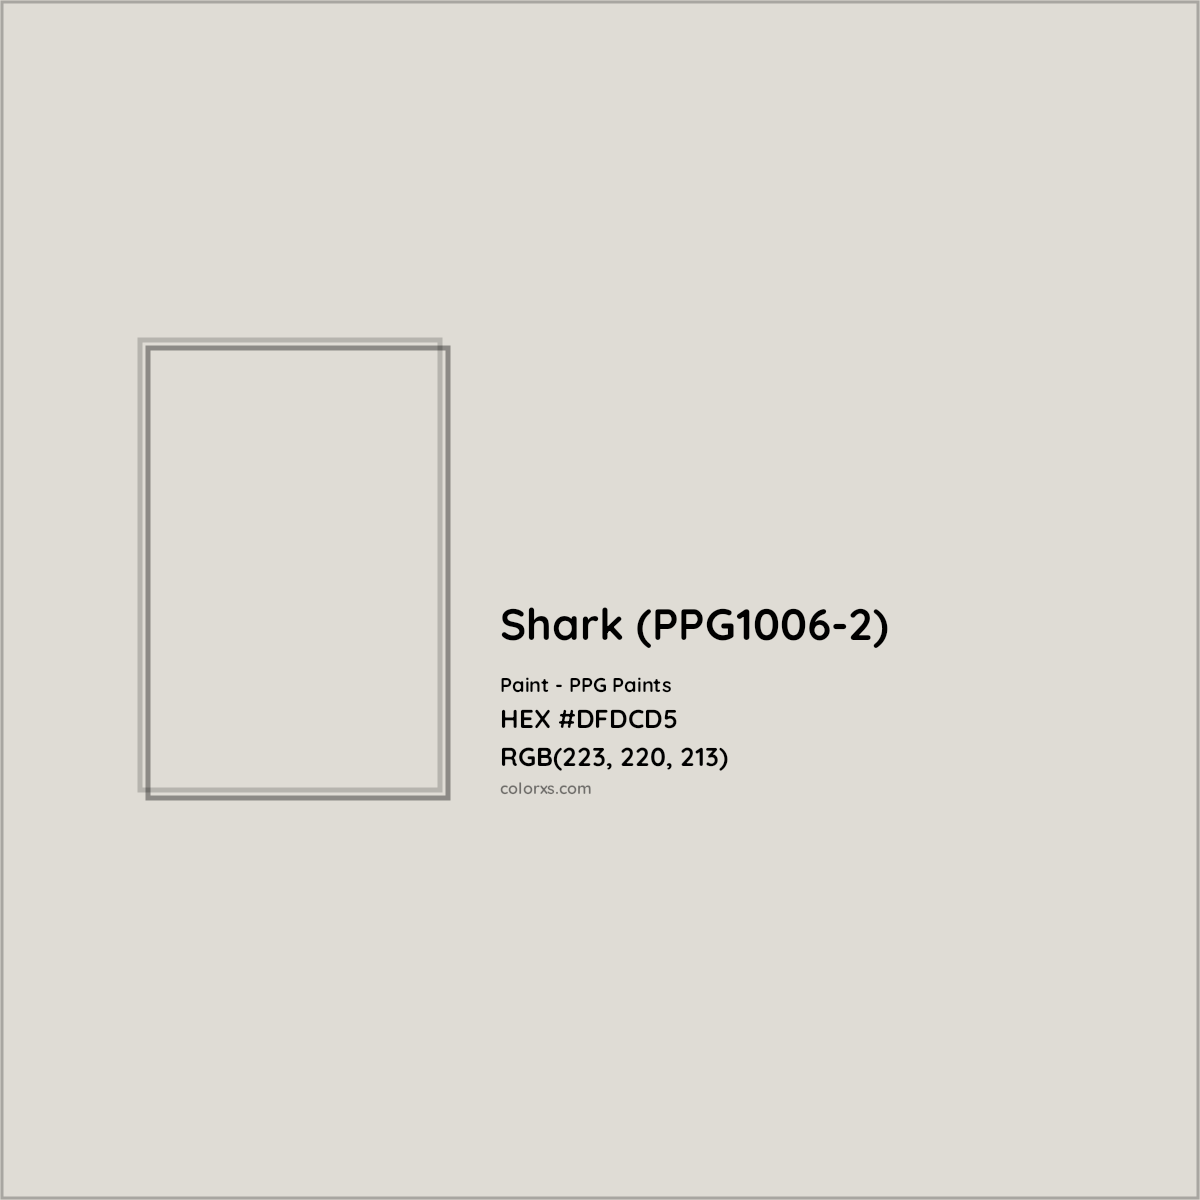 HEX #DFDCD5 Shark (PPG1006-2) Paint PPG Paints - Color Code